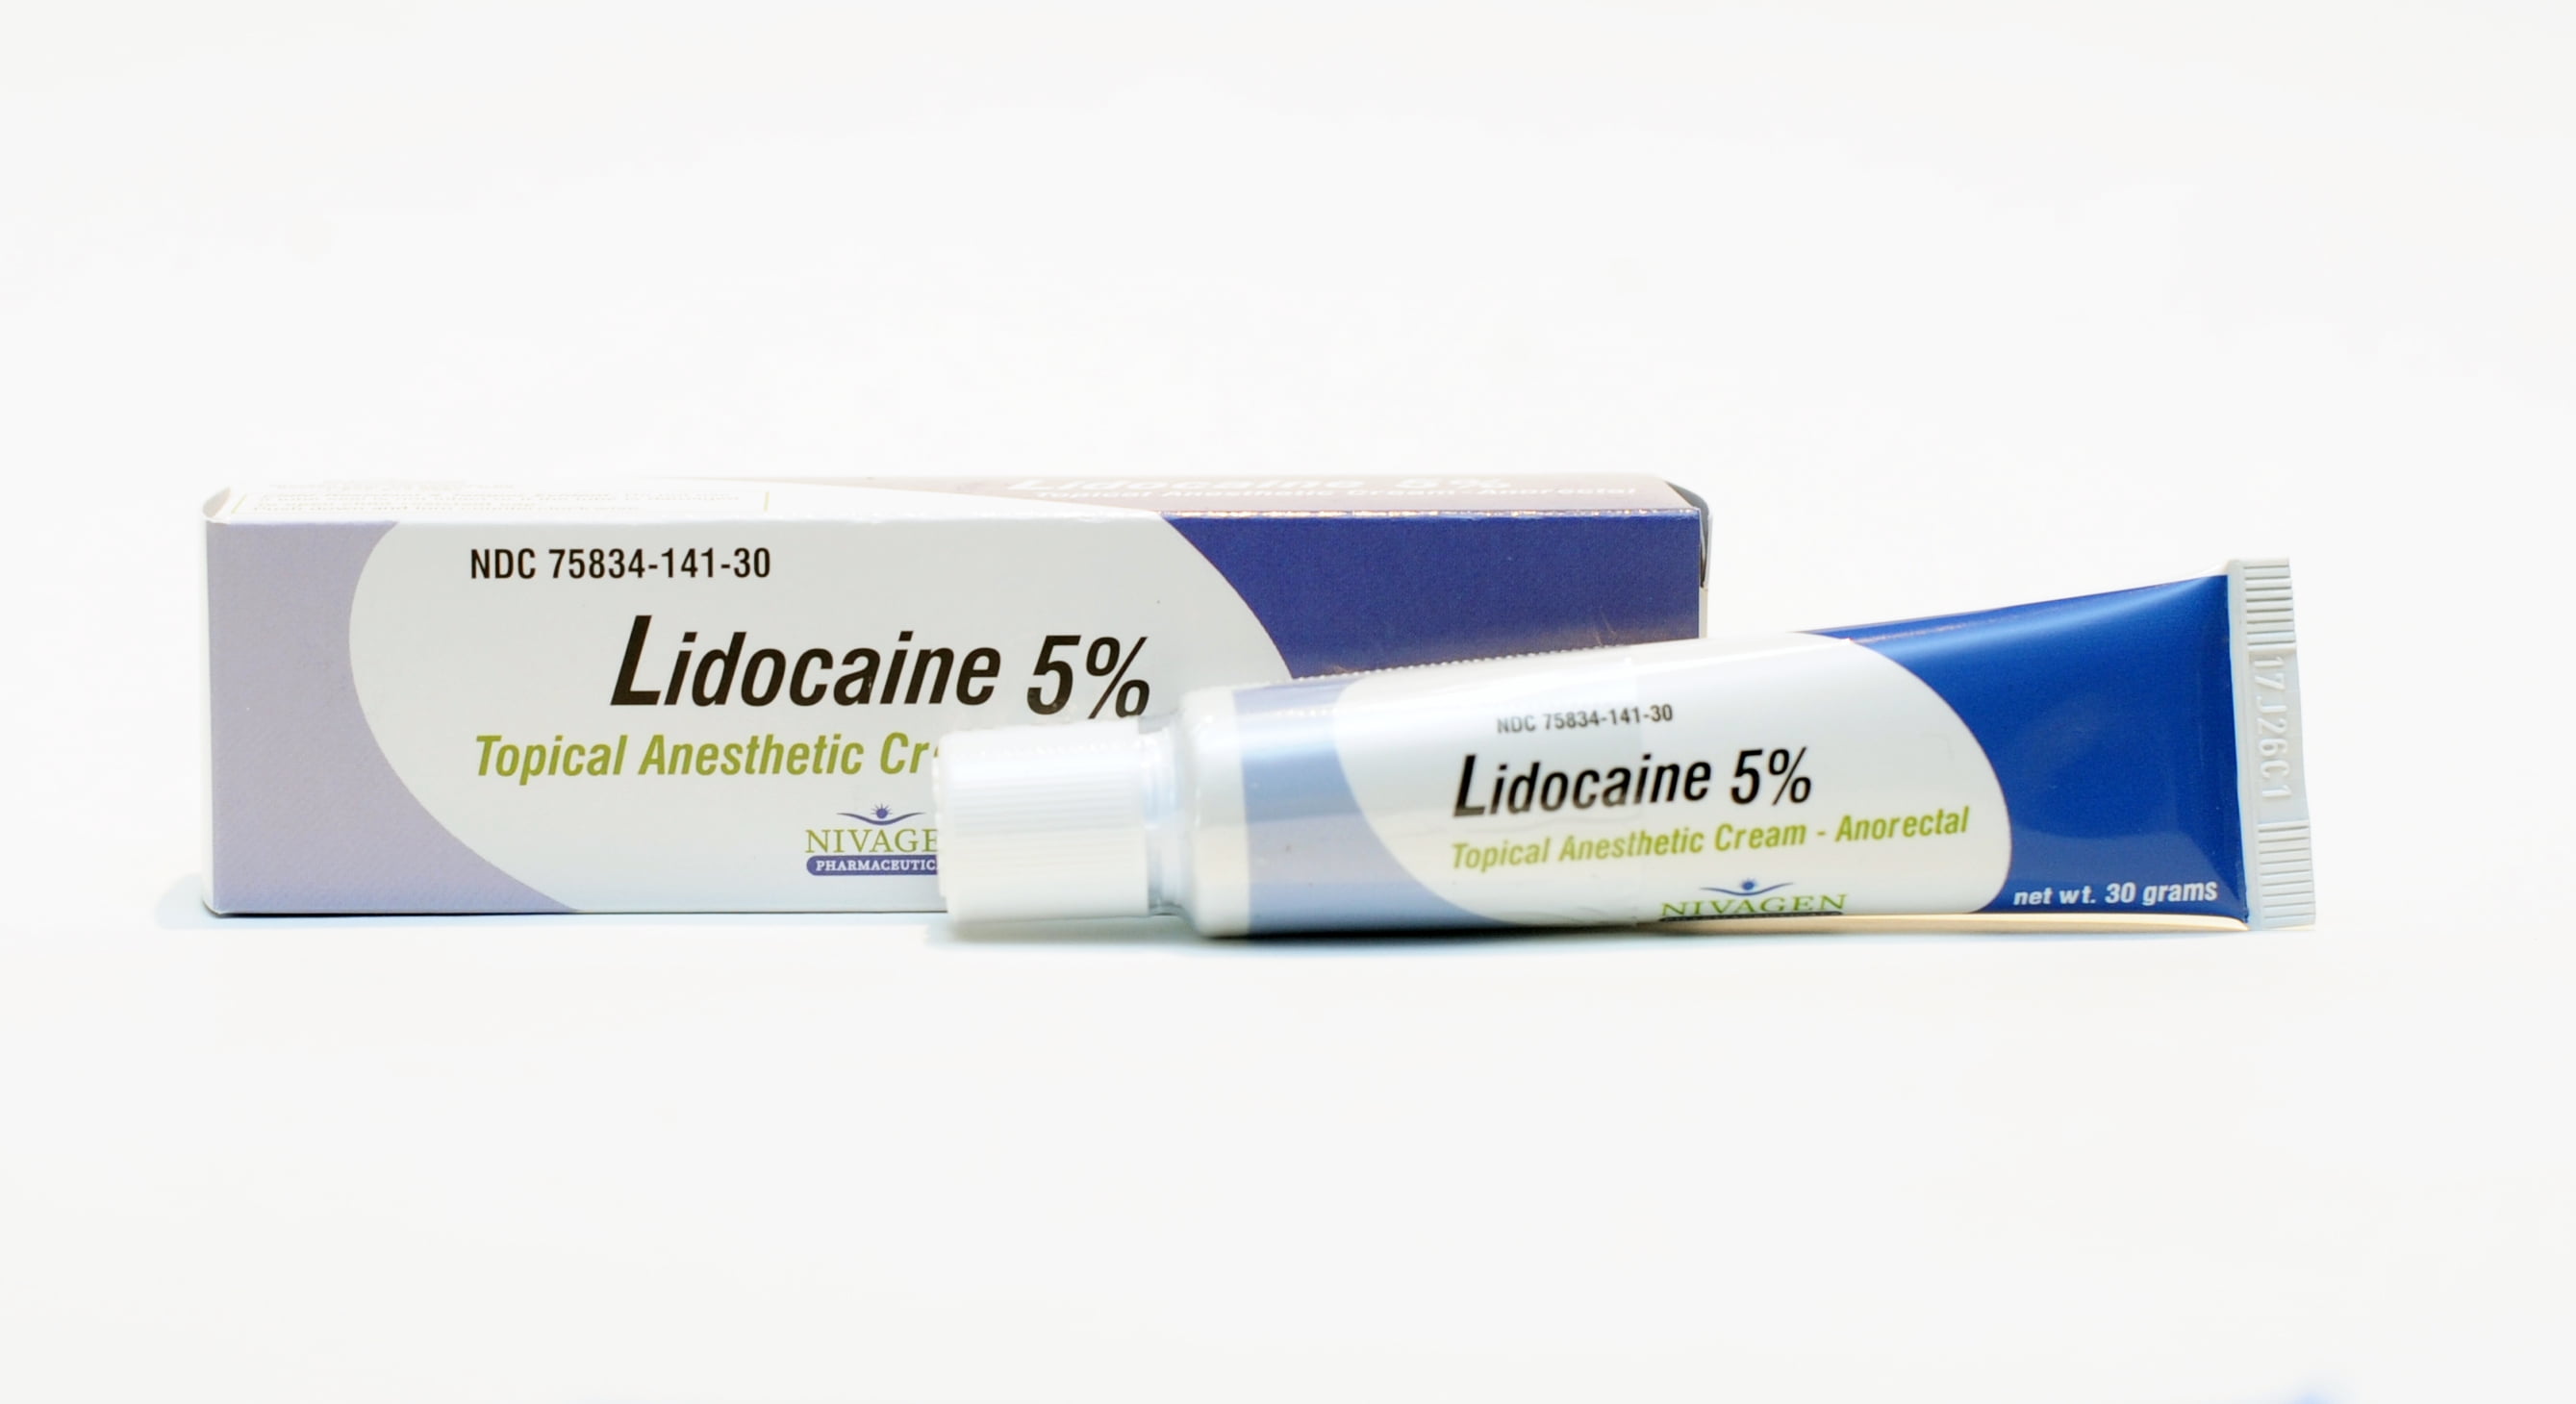 Lidocaine 5% Anorectal Cream